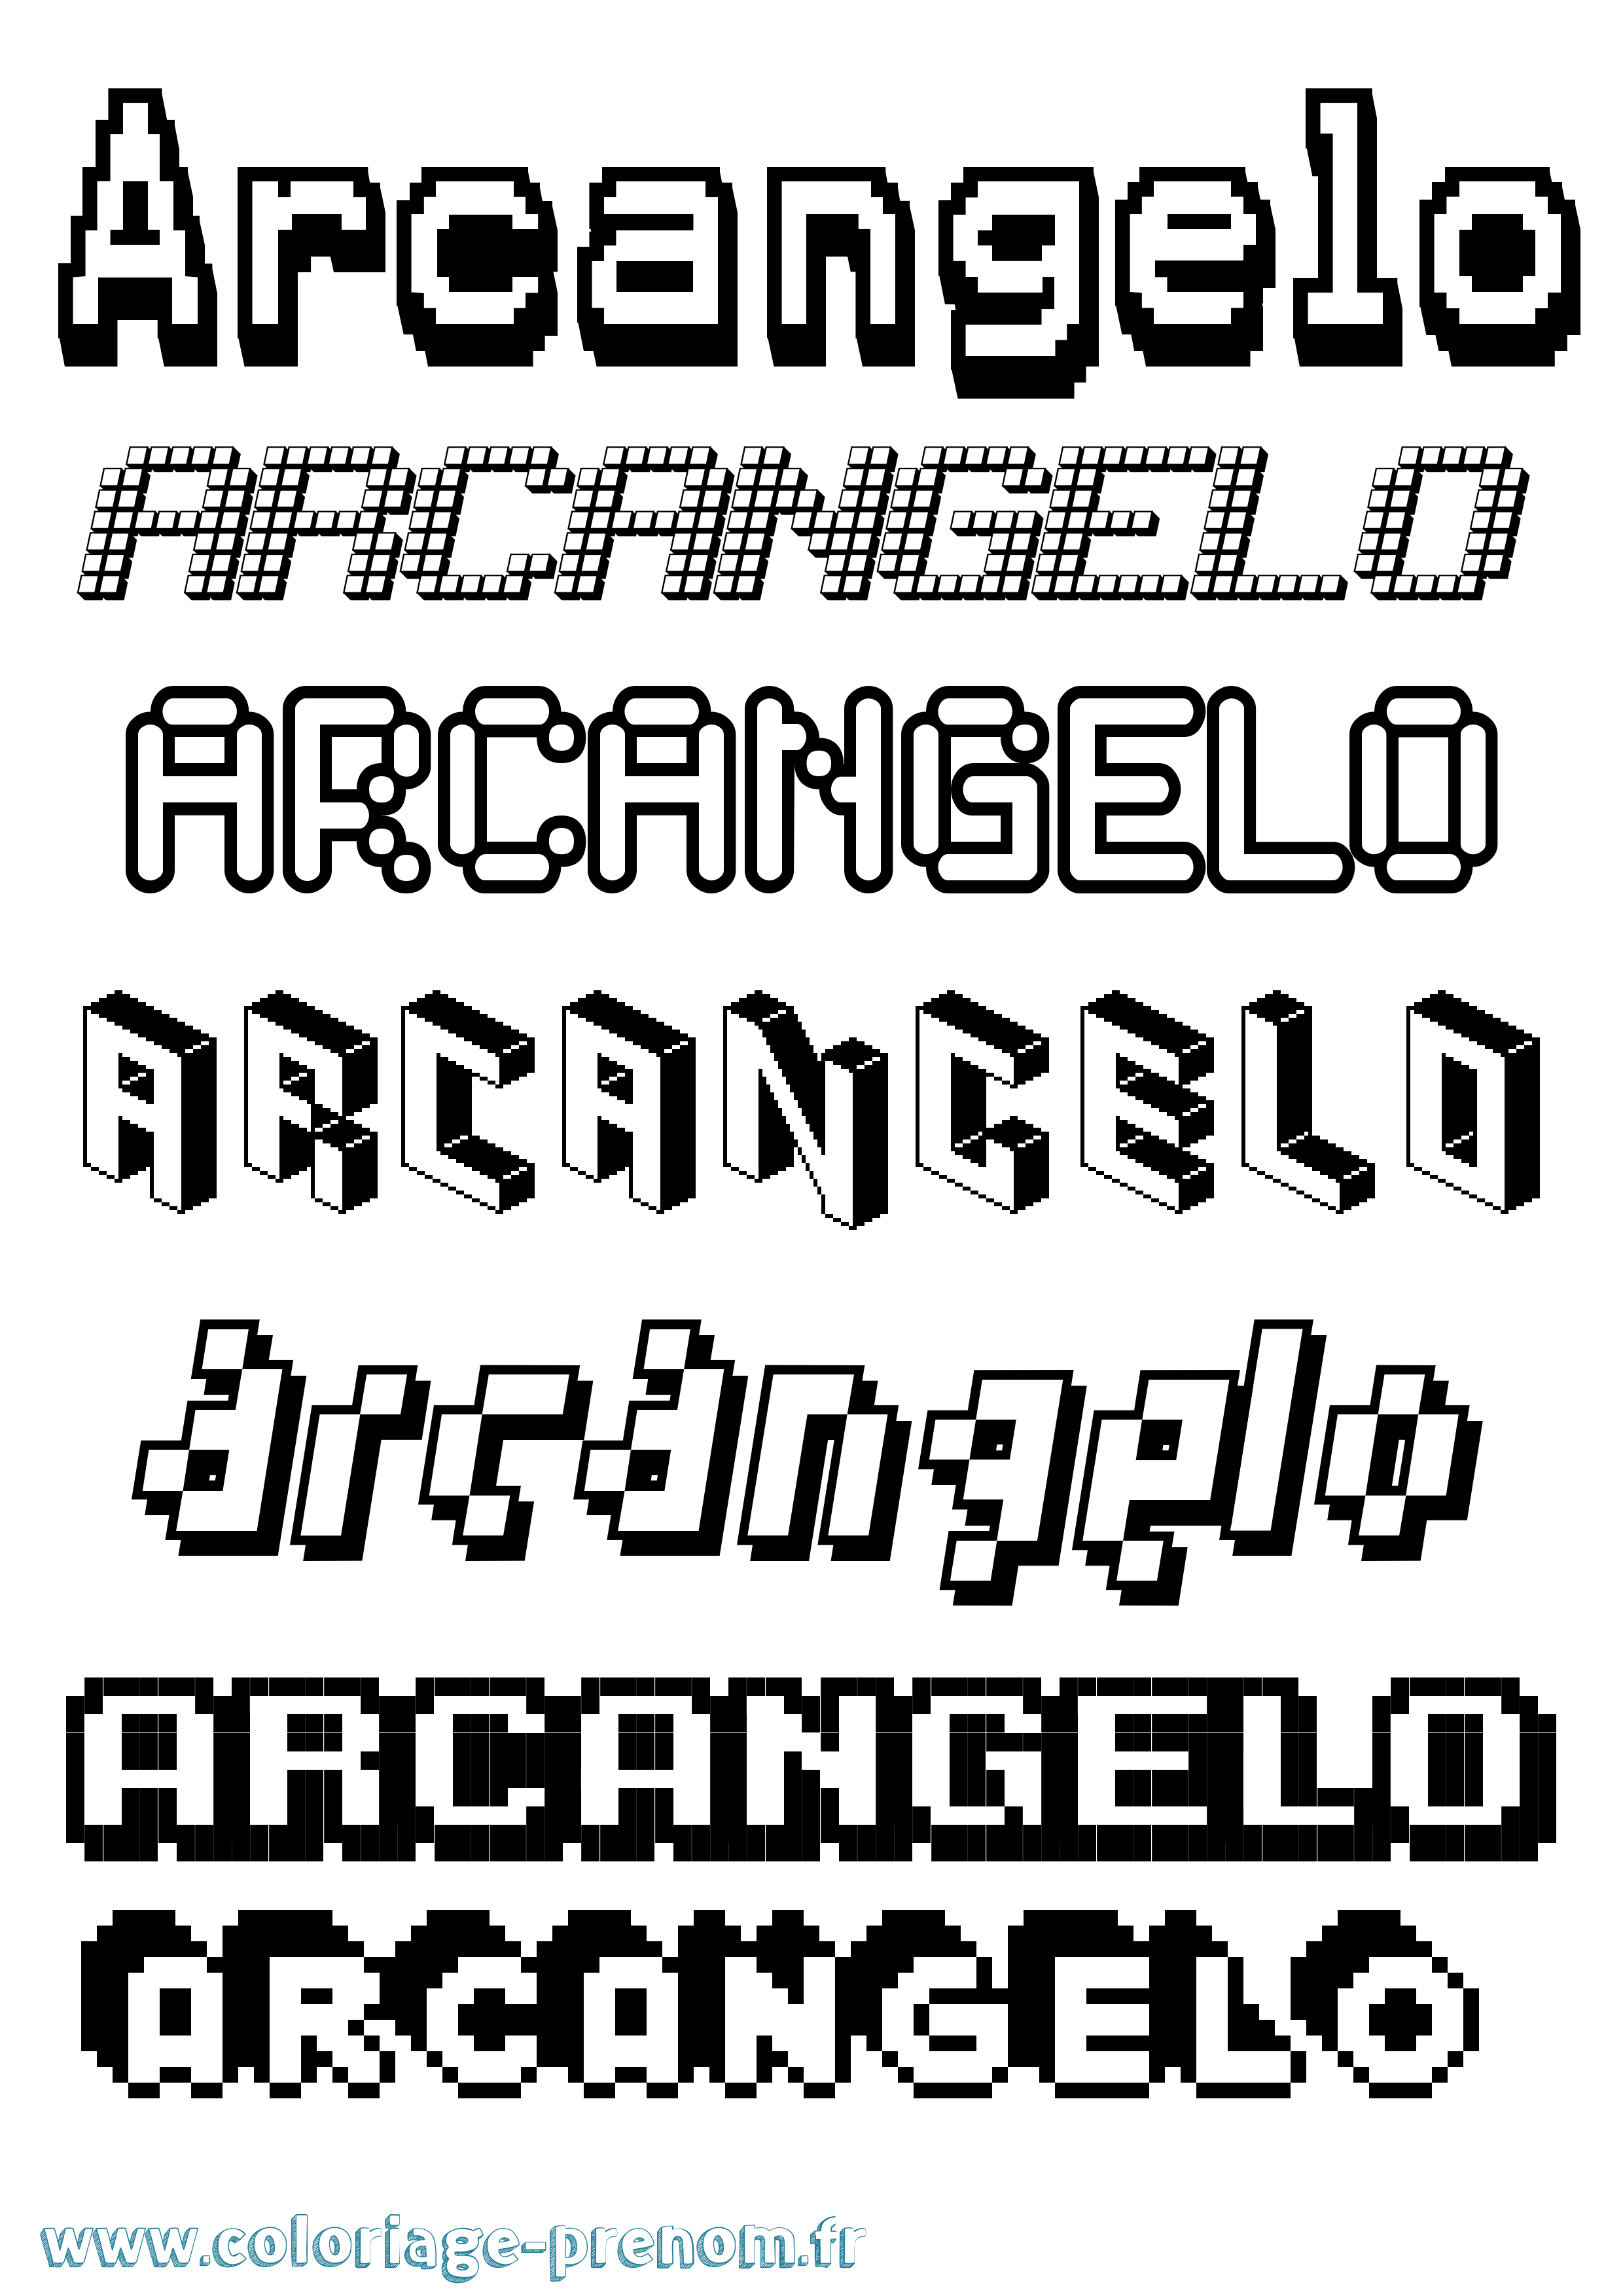 Coloriage prénom Arcangelo Pixel